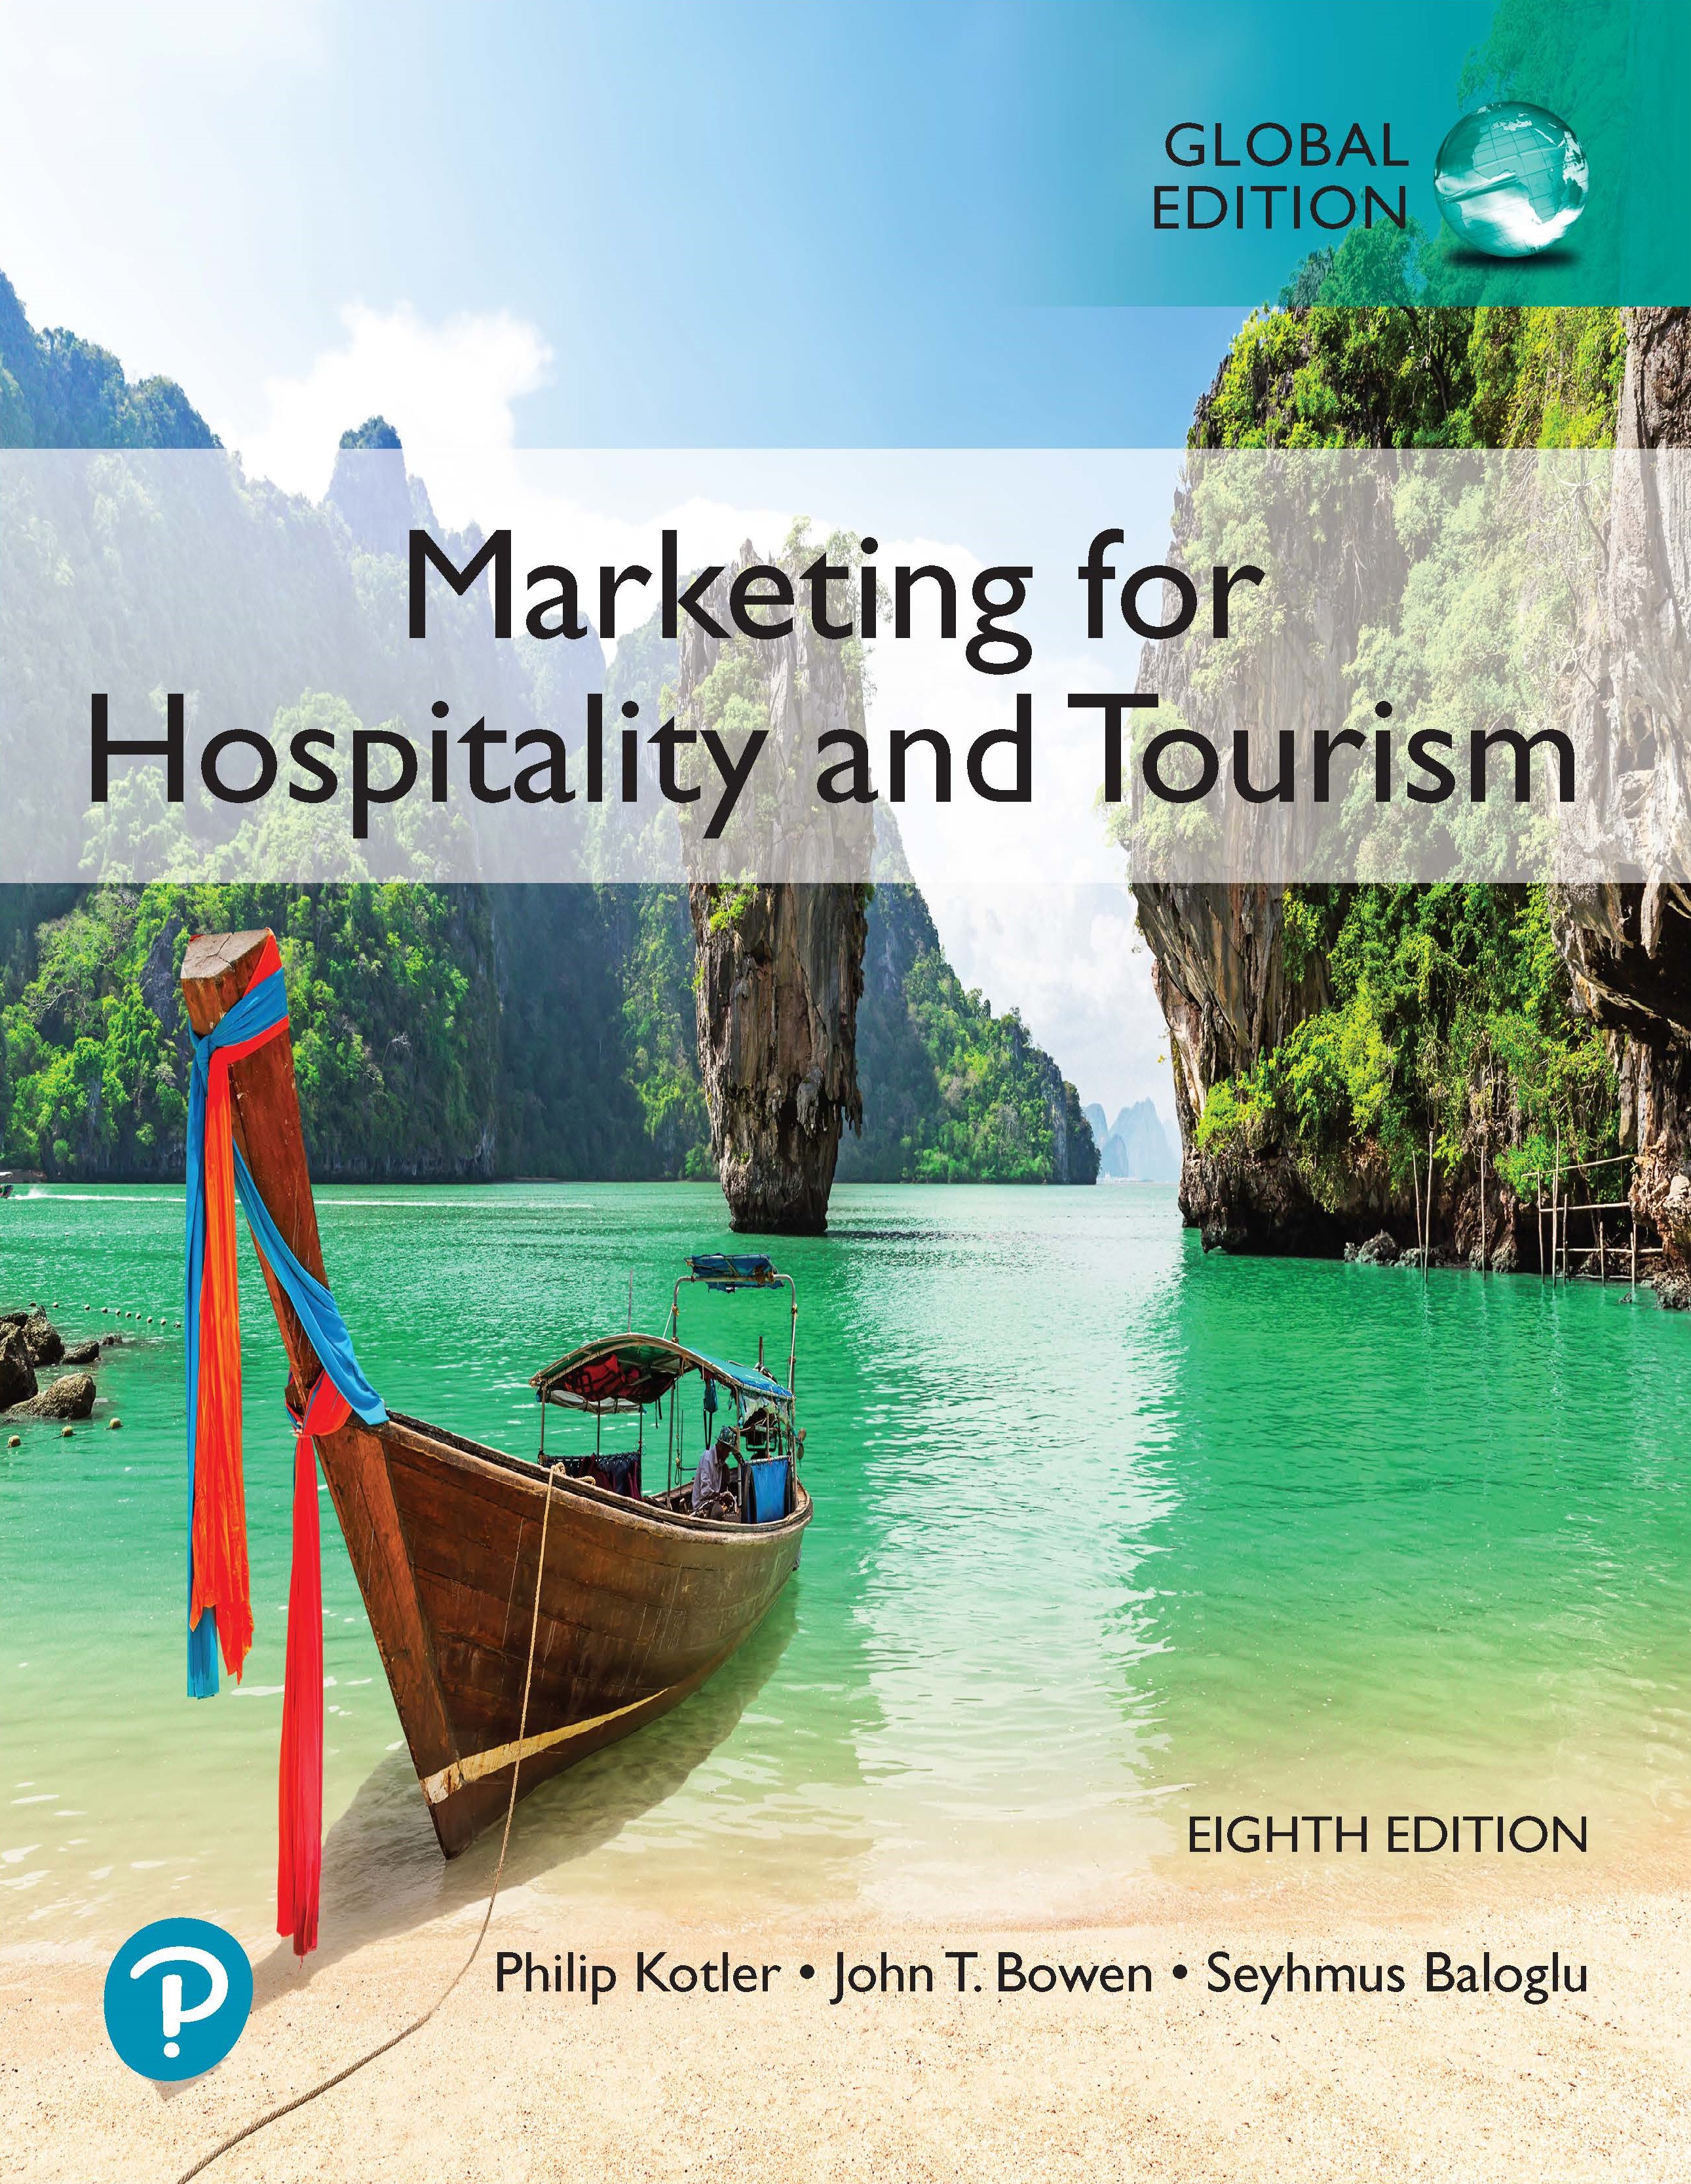 <img alt="Marketing for Hospitality and Tourism, 8th Edition, Philip Kotler, John T. Bowen, Seyhmus Baloglu"